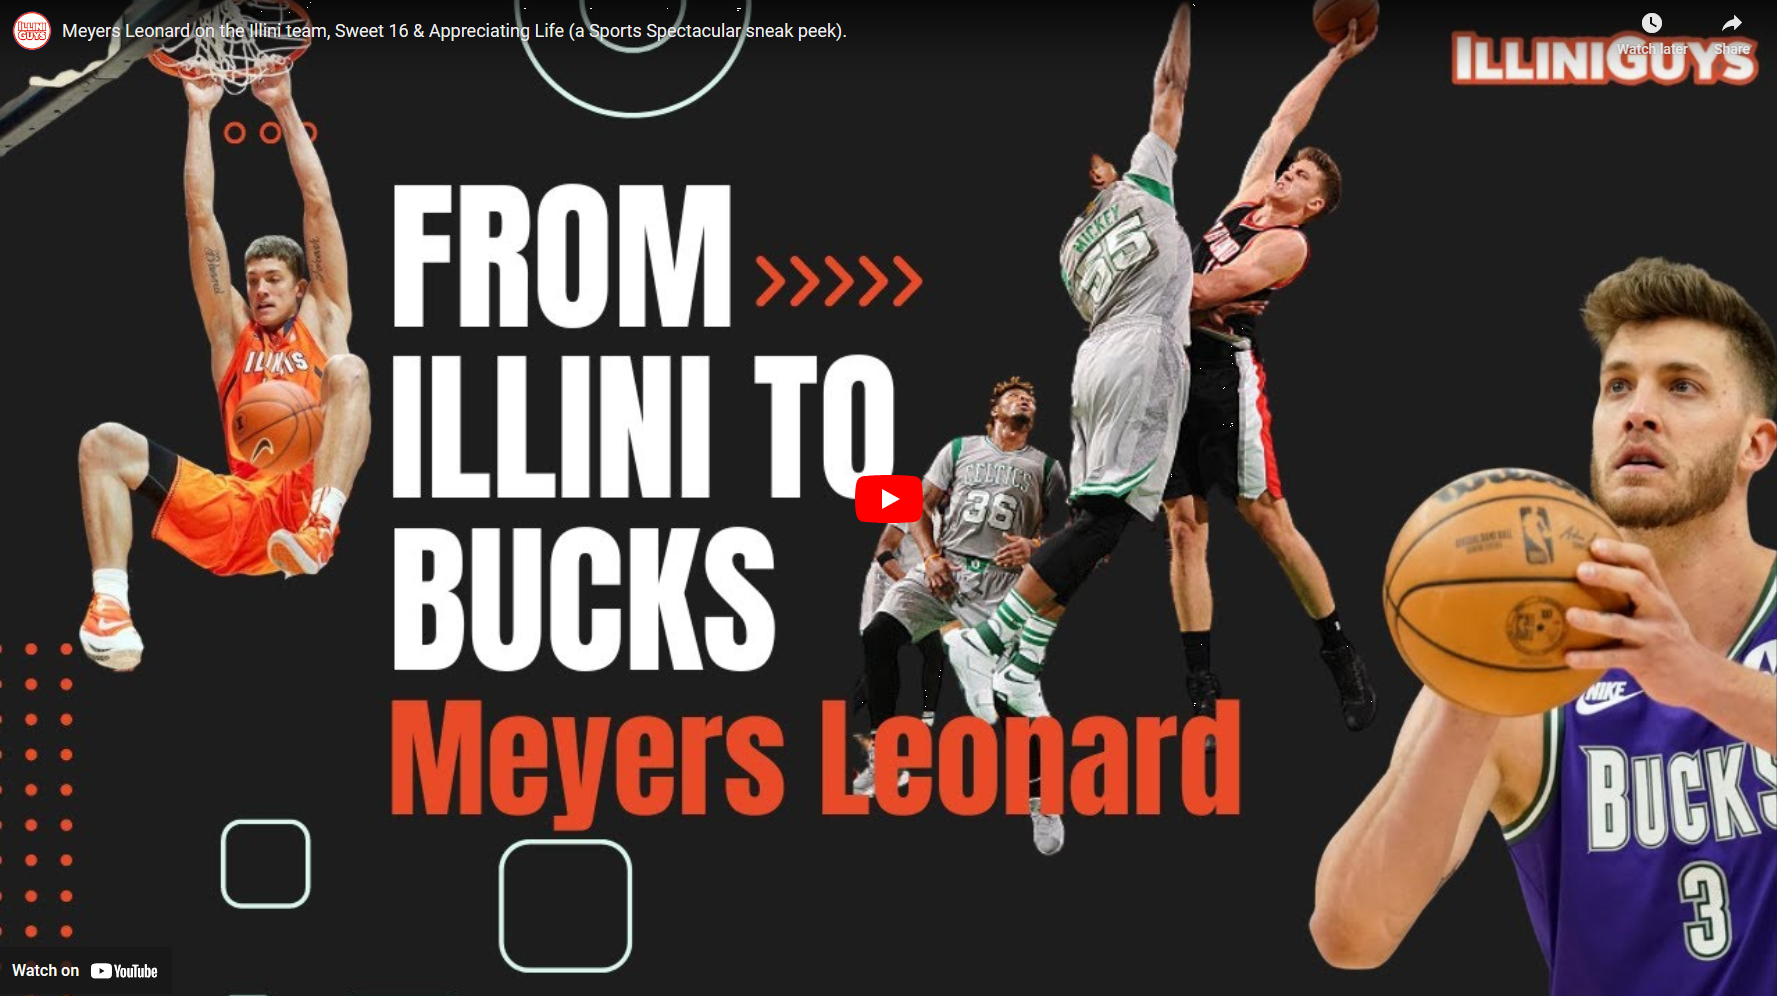 Meyers Leonard Speaks Out (An IlliniGuys Sports Spectacular Sneek Peek)